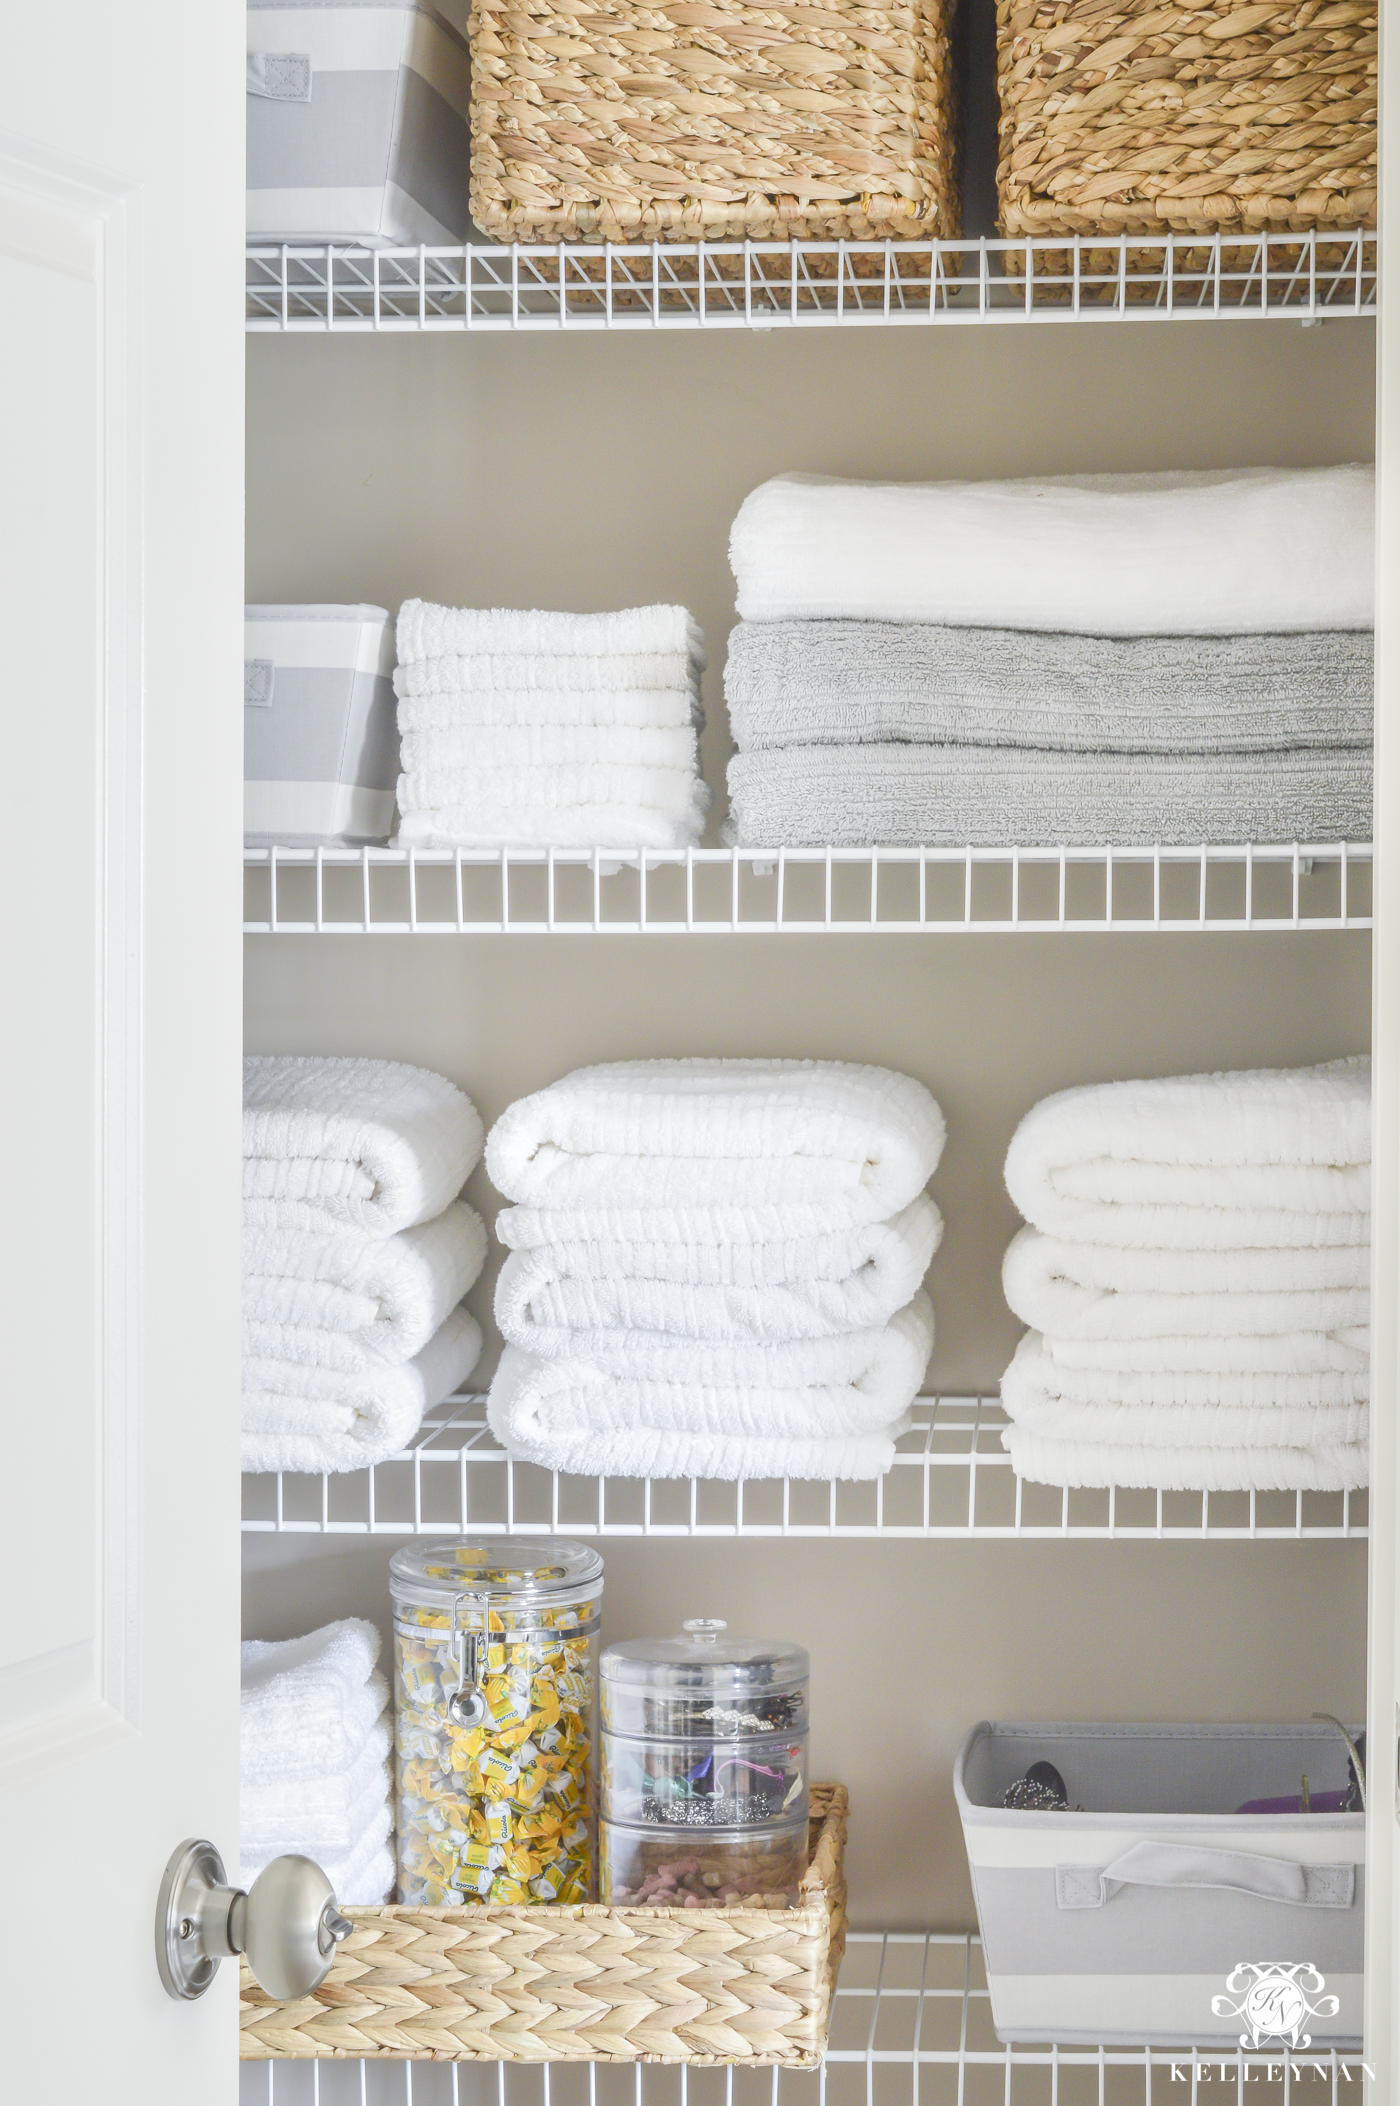 https://kelleynan.com/wp-content/uploads/2017/01/Organized-Bathroom-Linen-Closet-with-Towels-and-Baskets-9-of-14.jpg